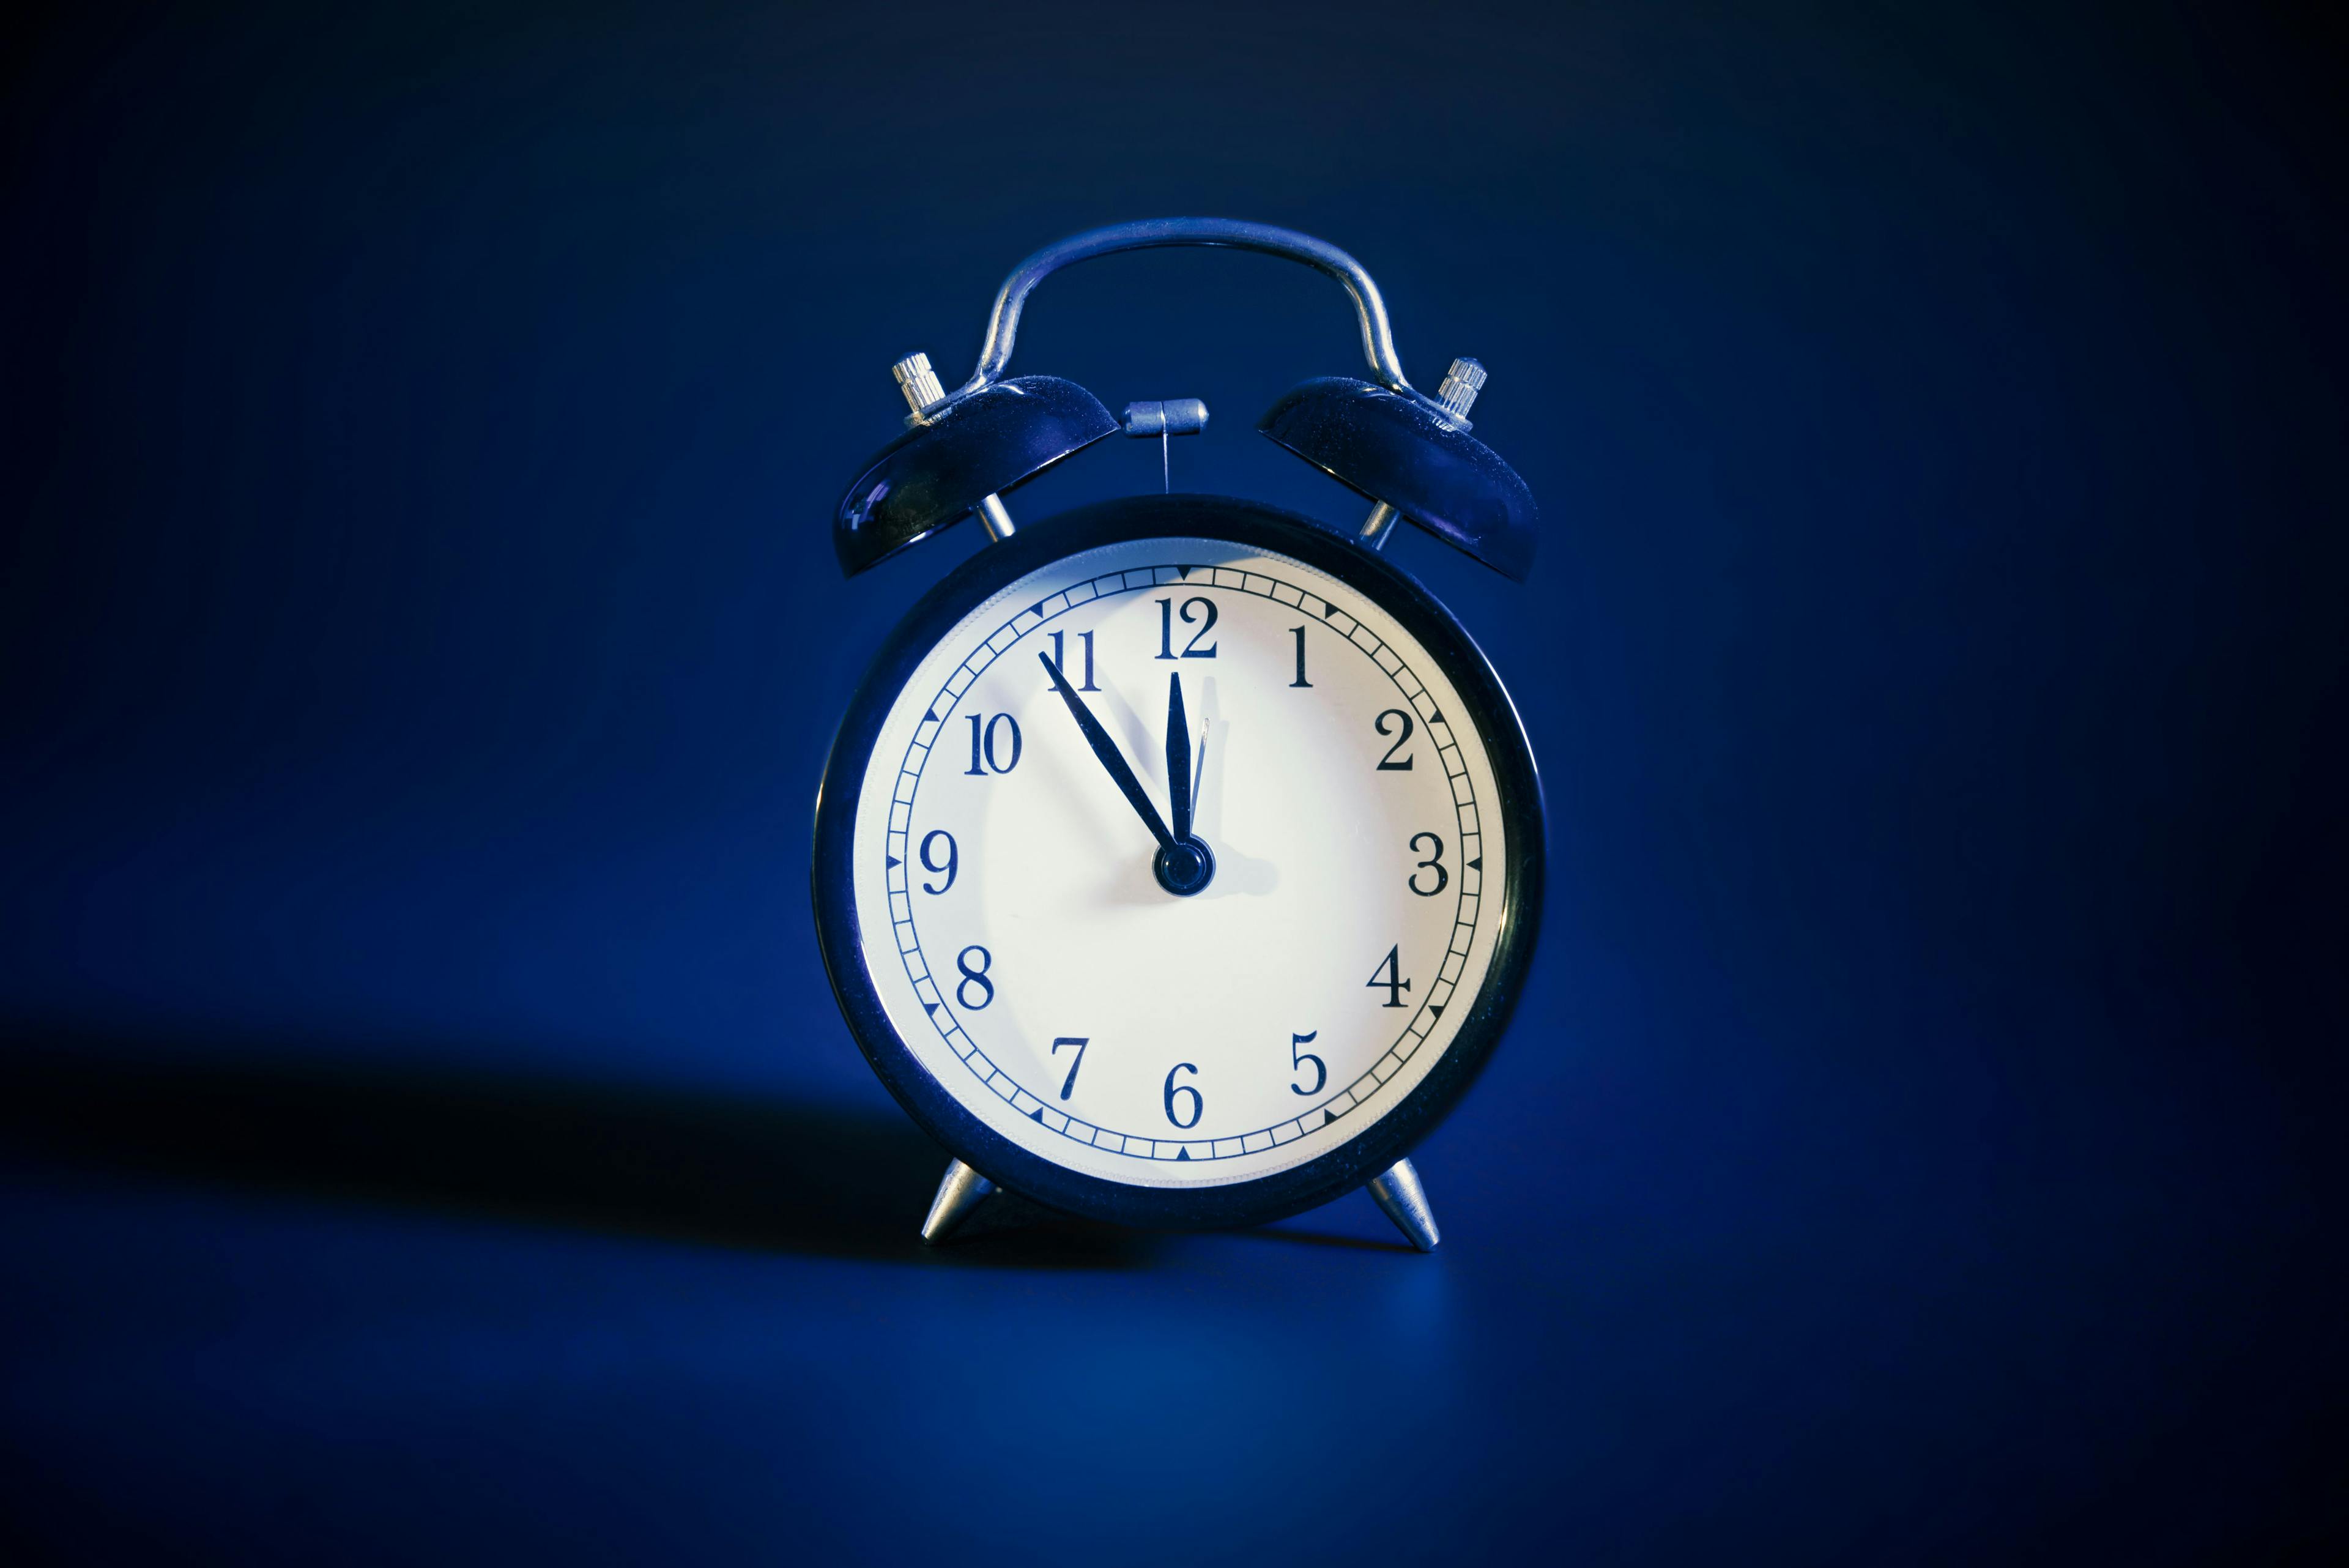 Analog clock on blue background | Image Credit: © Proxima Studio - stock.adobe.com